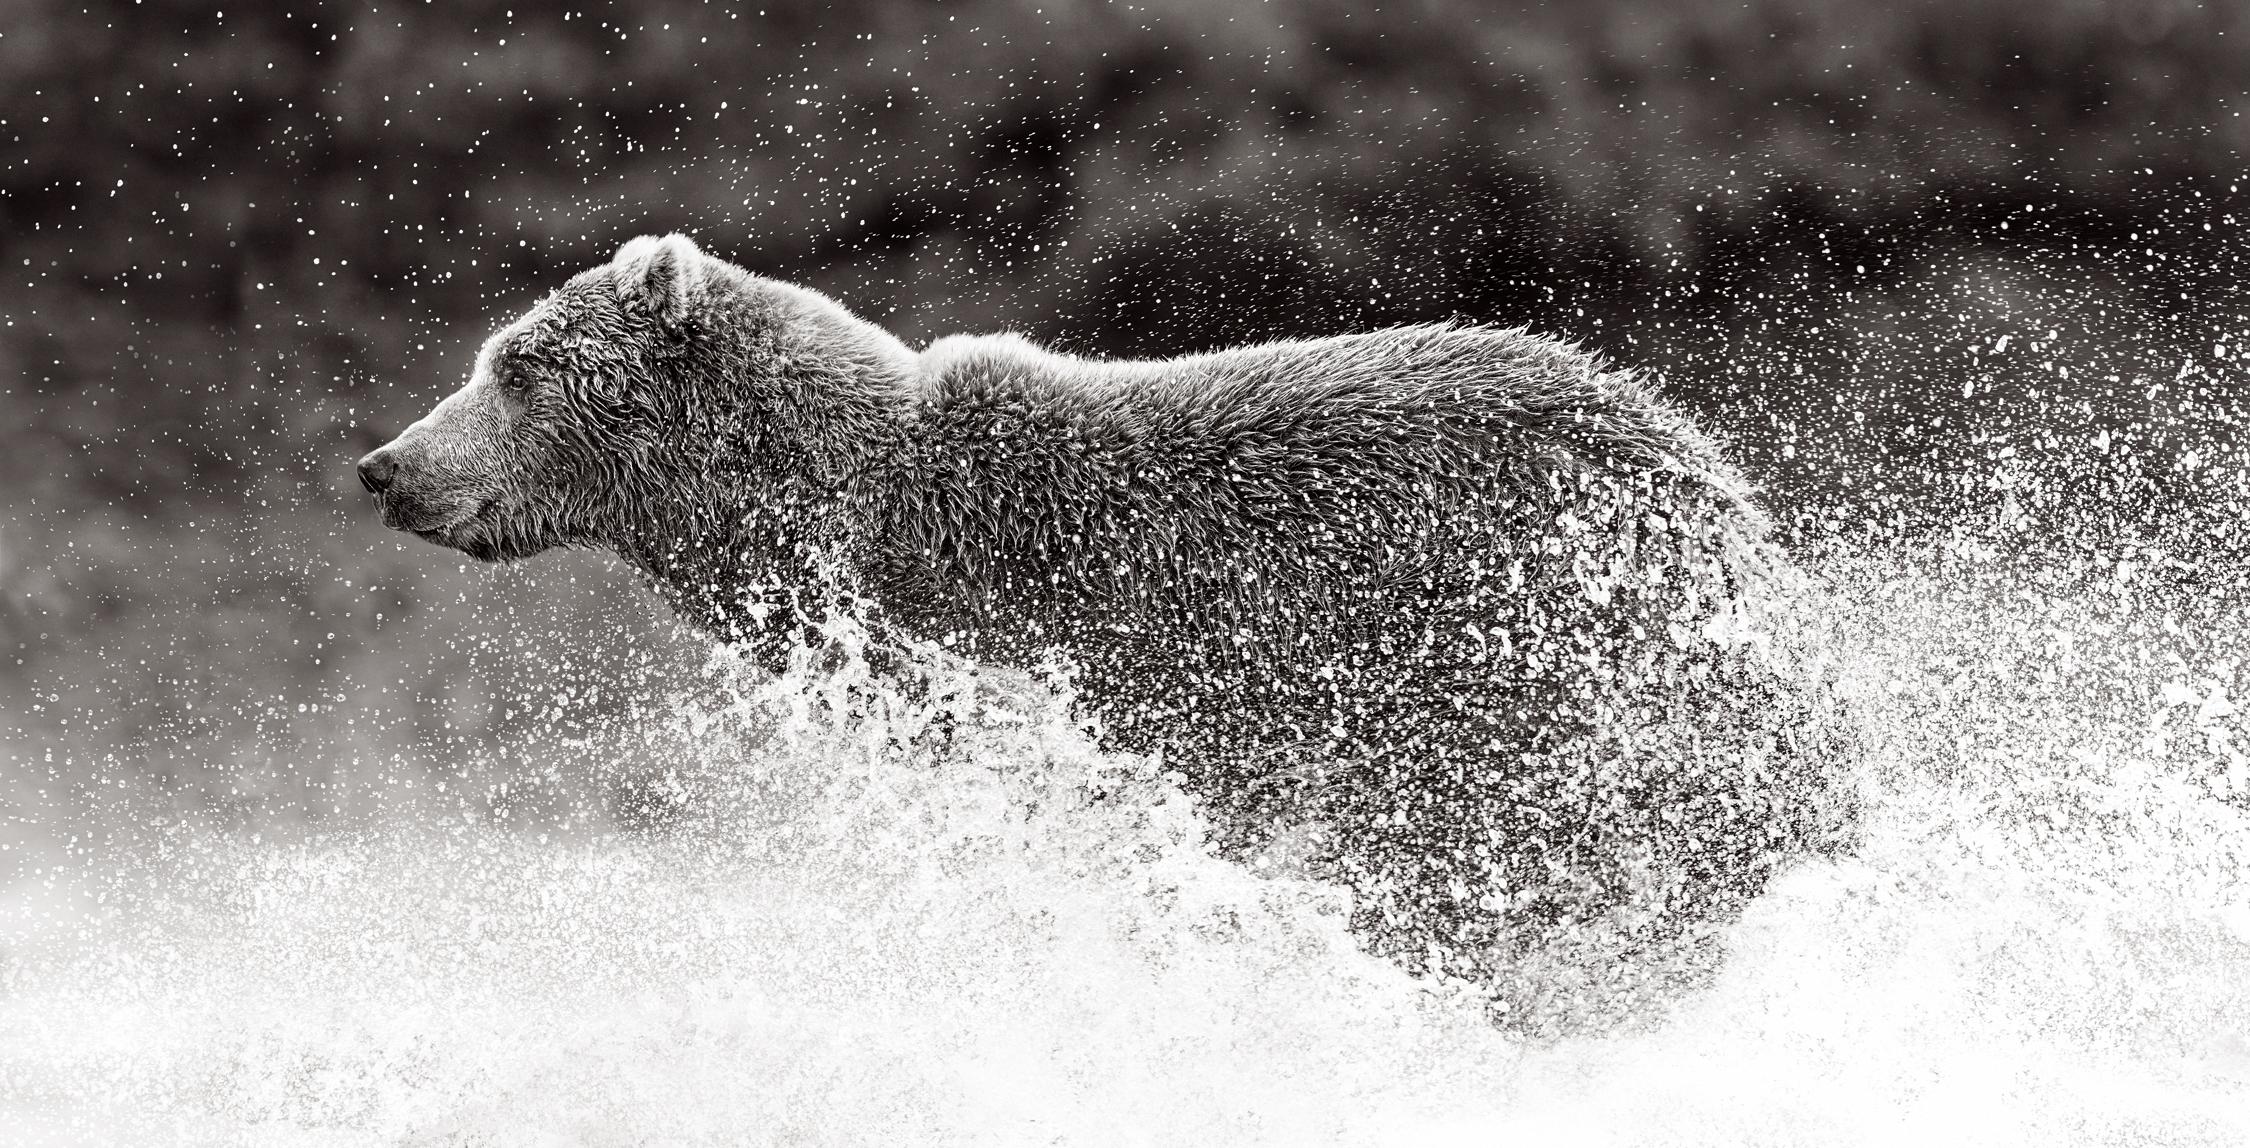 Drew Doggett Black and White Photograph - Black & white image of brown bear running with water splashing around him 